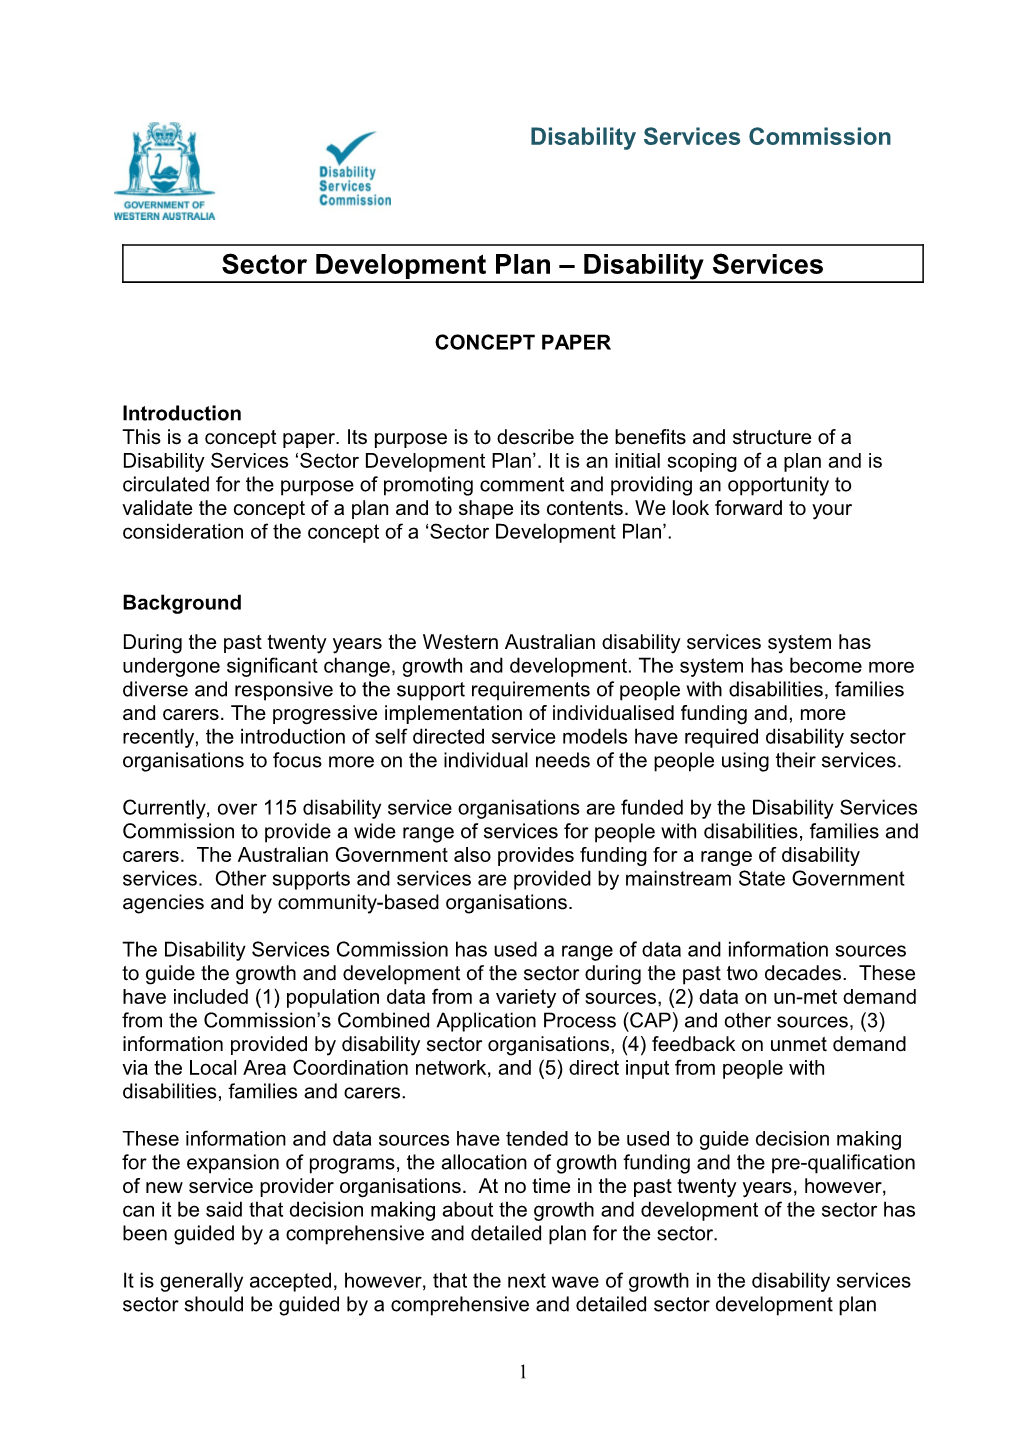 Sector Development Plan Concept Paper